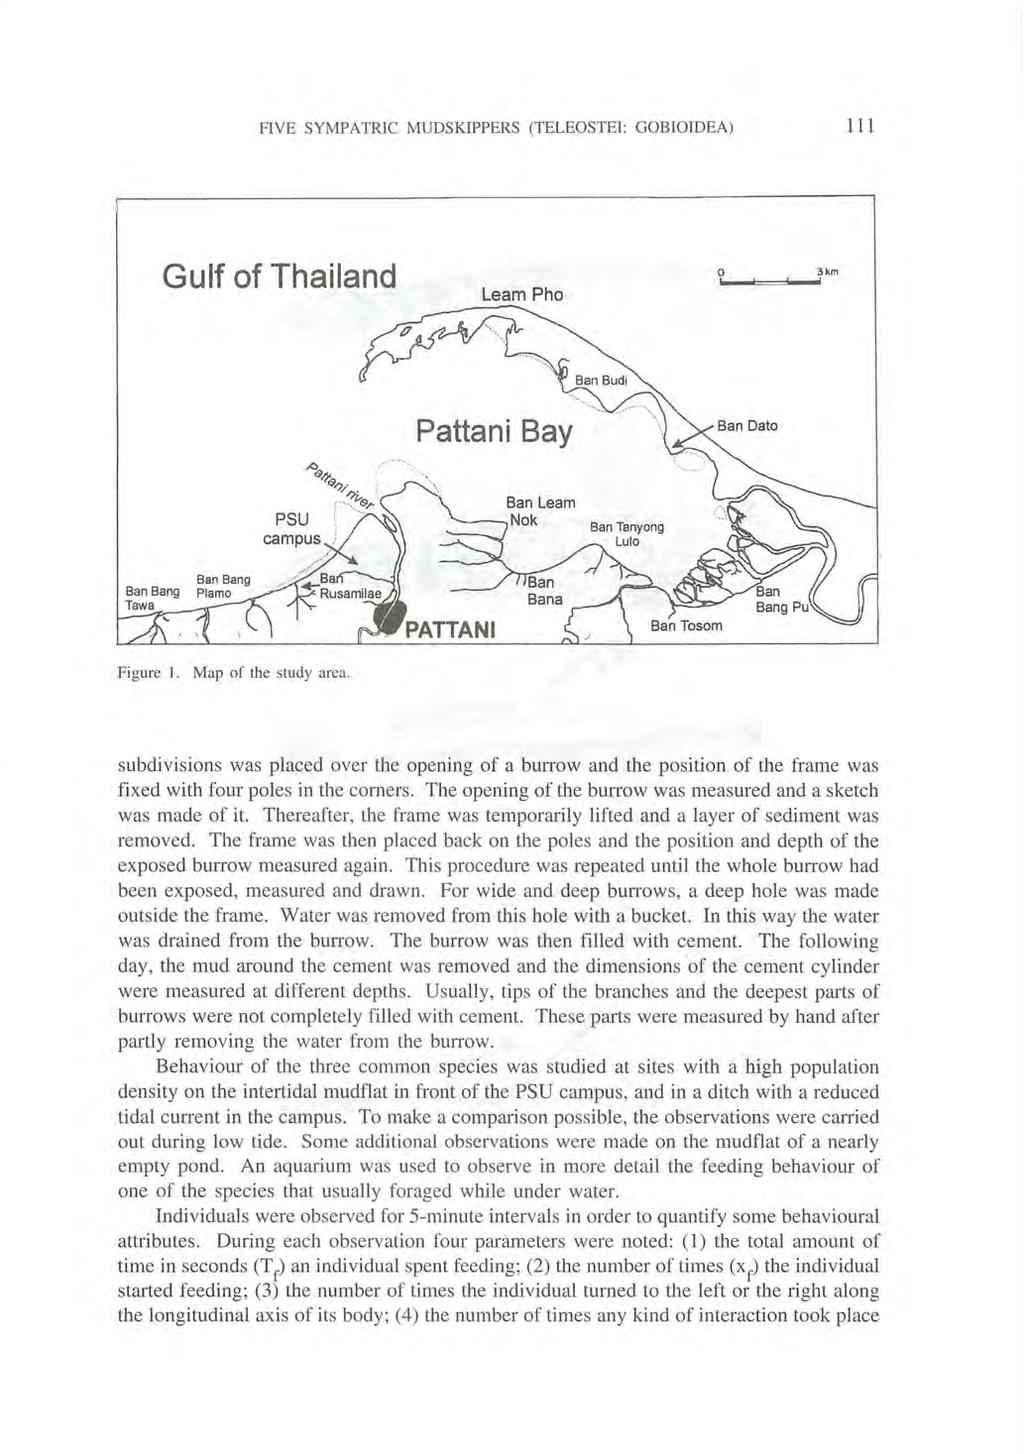 FIVE SYMPATRIC MUDSKIPPERS (TELEOSTEI: GOBIOIDEA) Ill Gulf of Thailand Learn Pho o..._-"==-...13 km PattaniBay Figure I. Map of the study area.